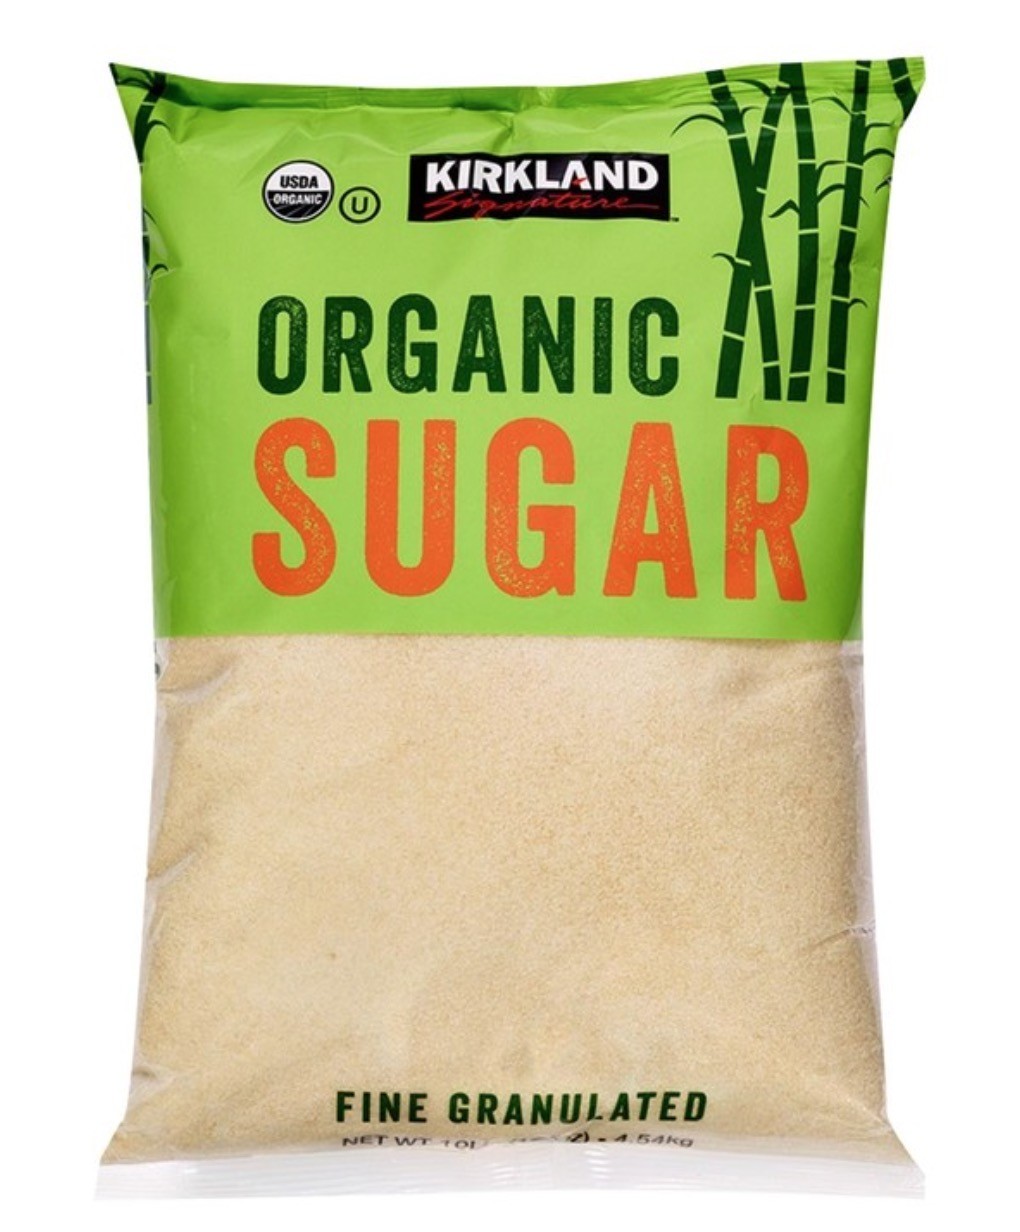 營業用 大包裝 有機 蔗糖 Kirkland Signature 科克蘭 有機蔗糖 4.54公斤 Kirkland Signature Organic Cane Sugar 4.54Kg